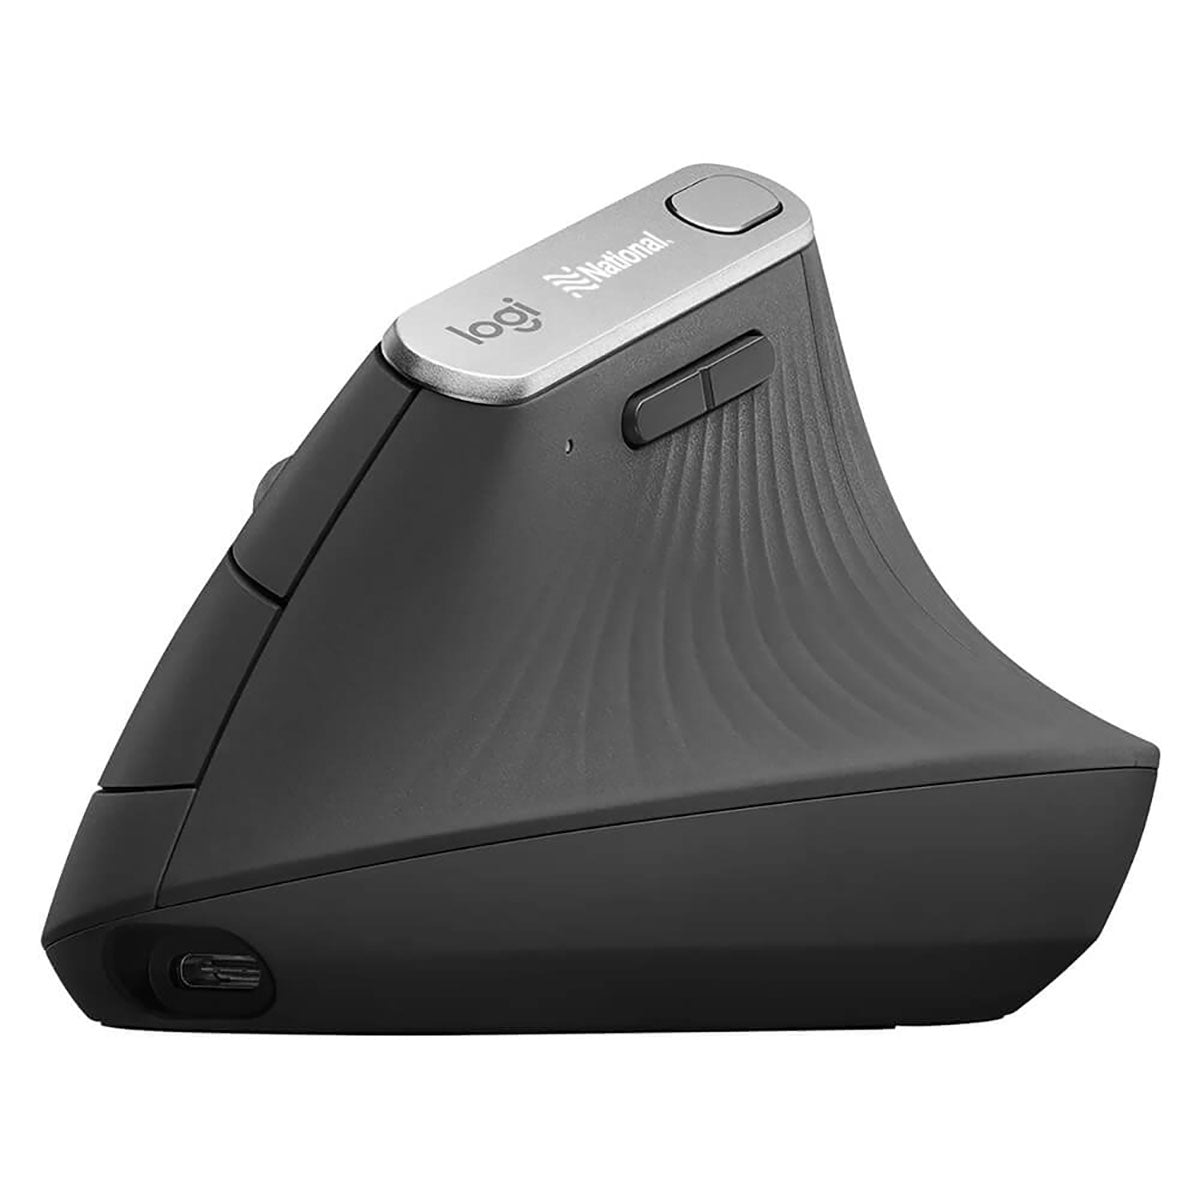 Logitech MX Vertical Ergonomic Wireless Mouse, Black